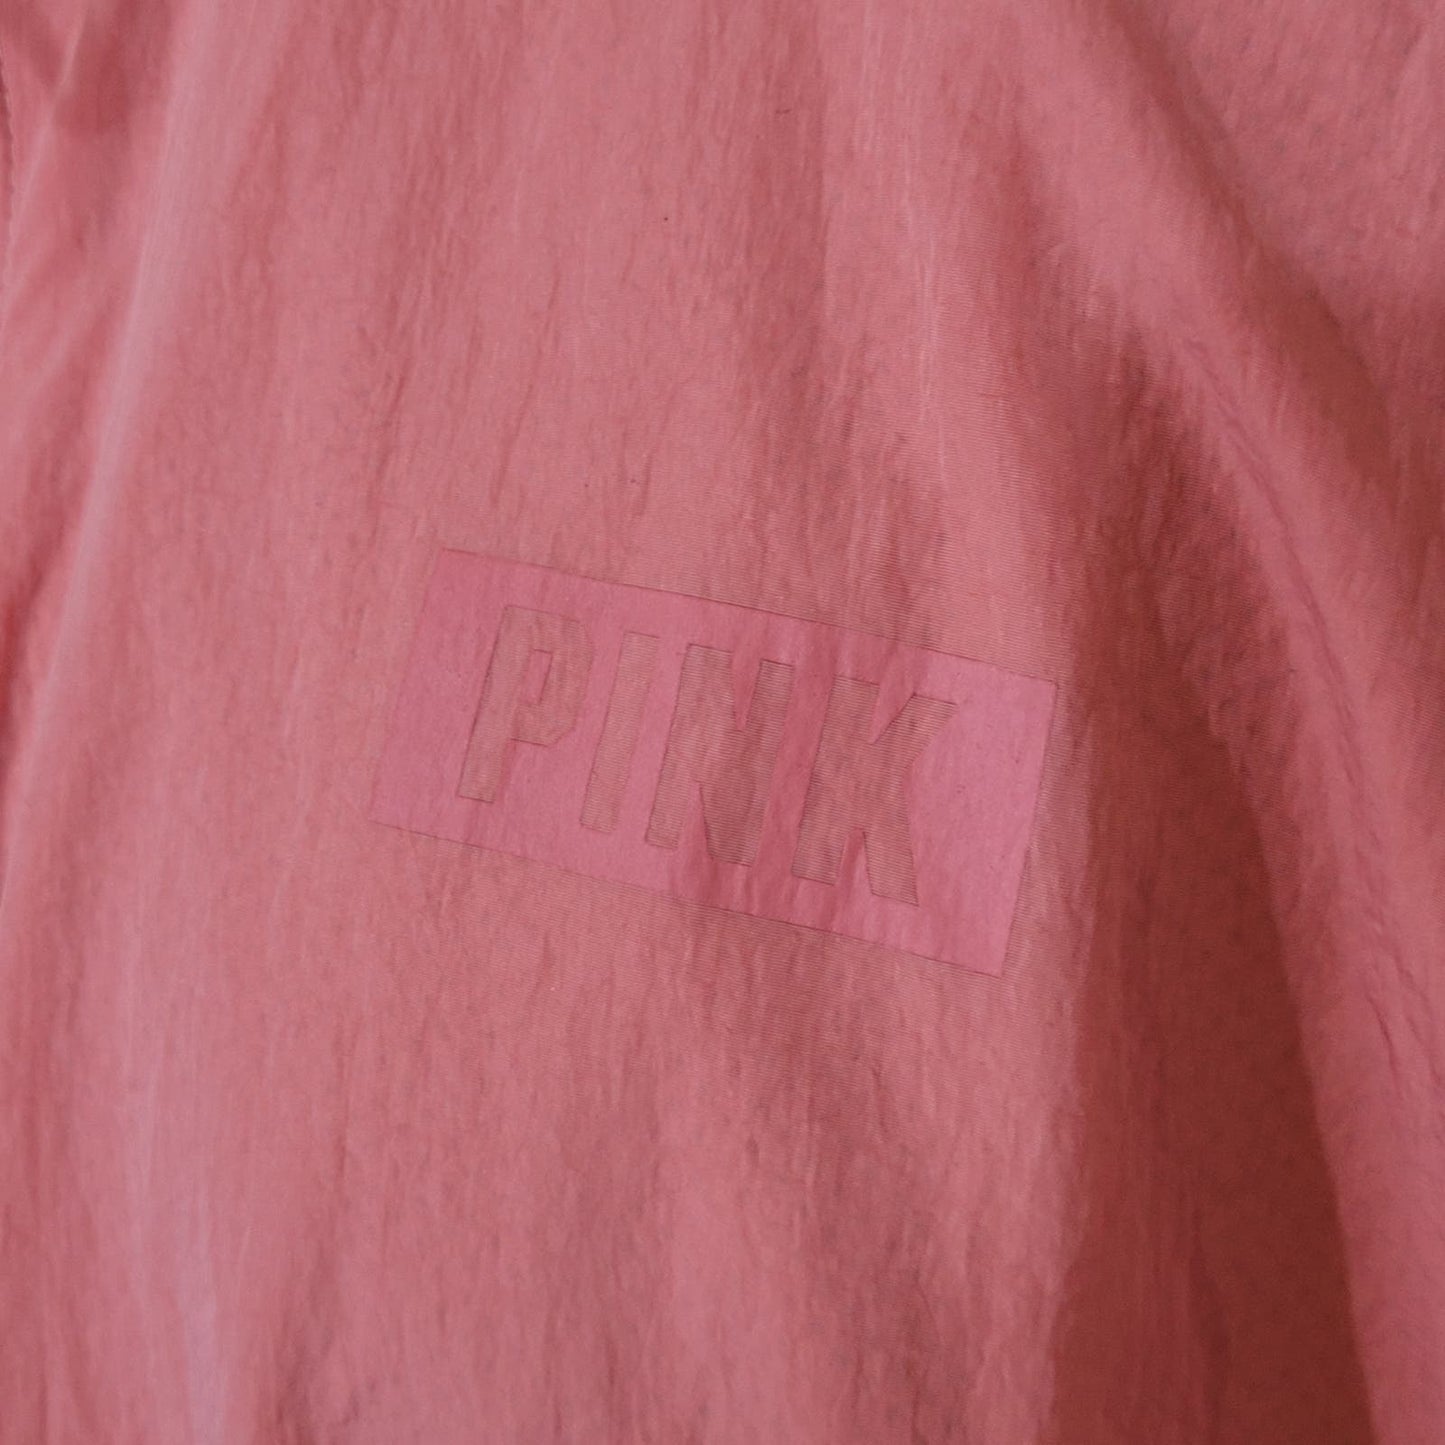 Pink by Victoria's Secret Pink Windbreaker - Size M / L